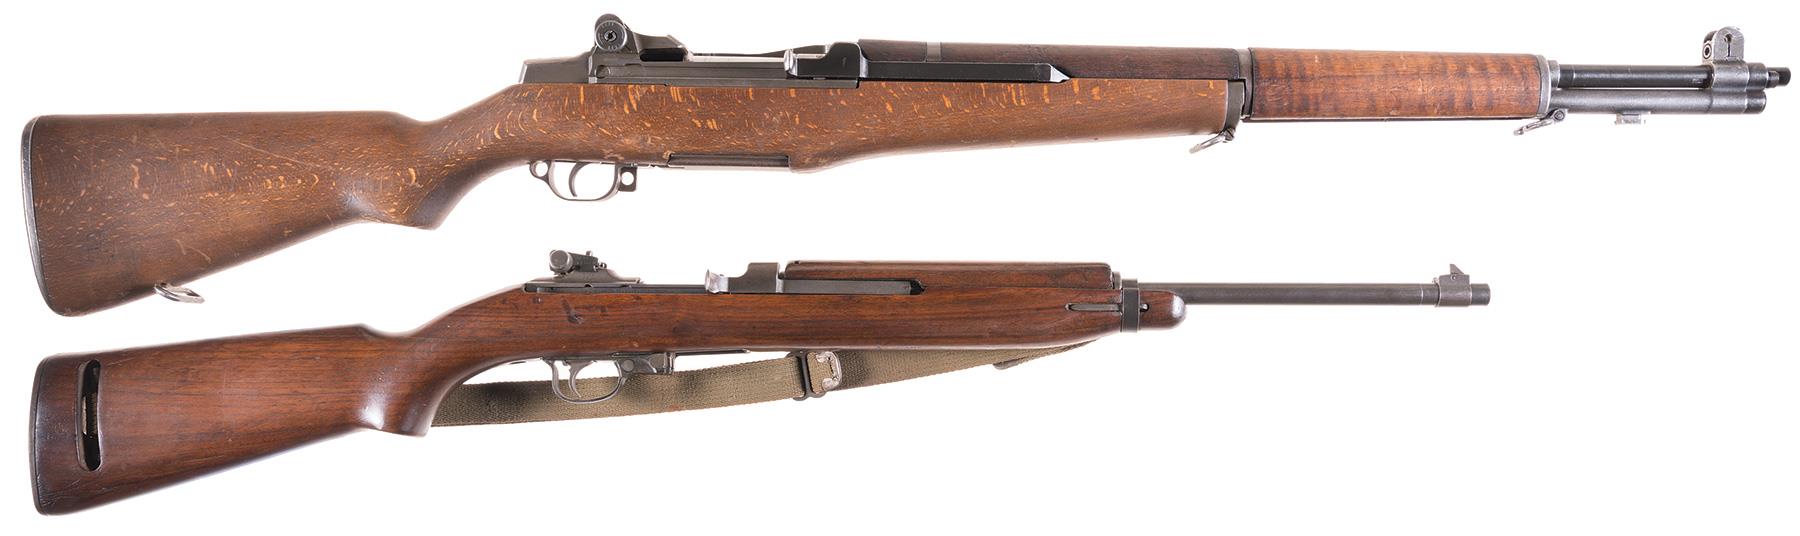 Two U.S. M1 Semi-Automatic Long Guns -A) U.S. Springfield M1 Garand Rifle w...